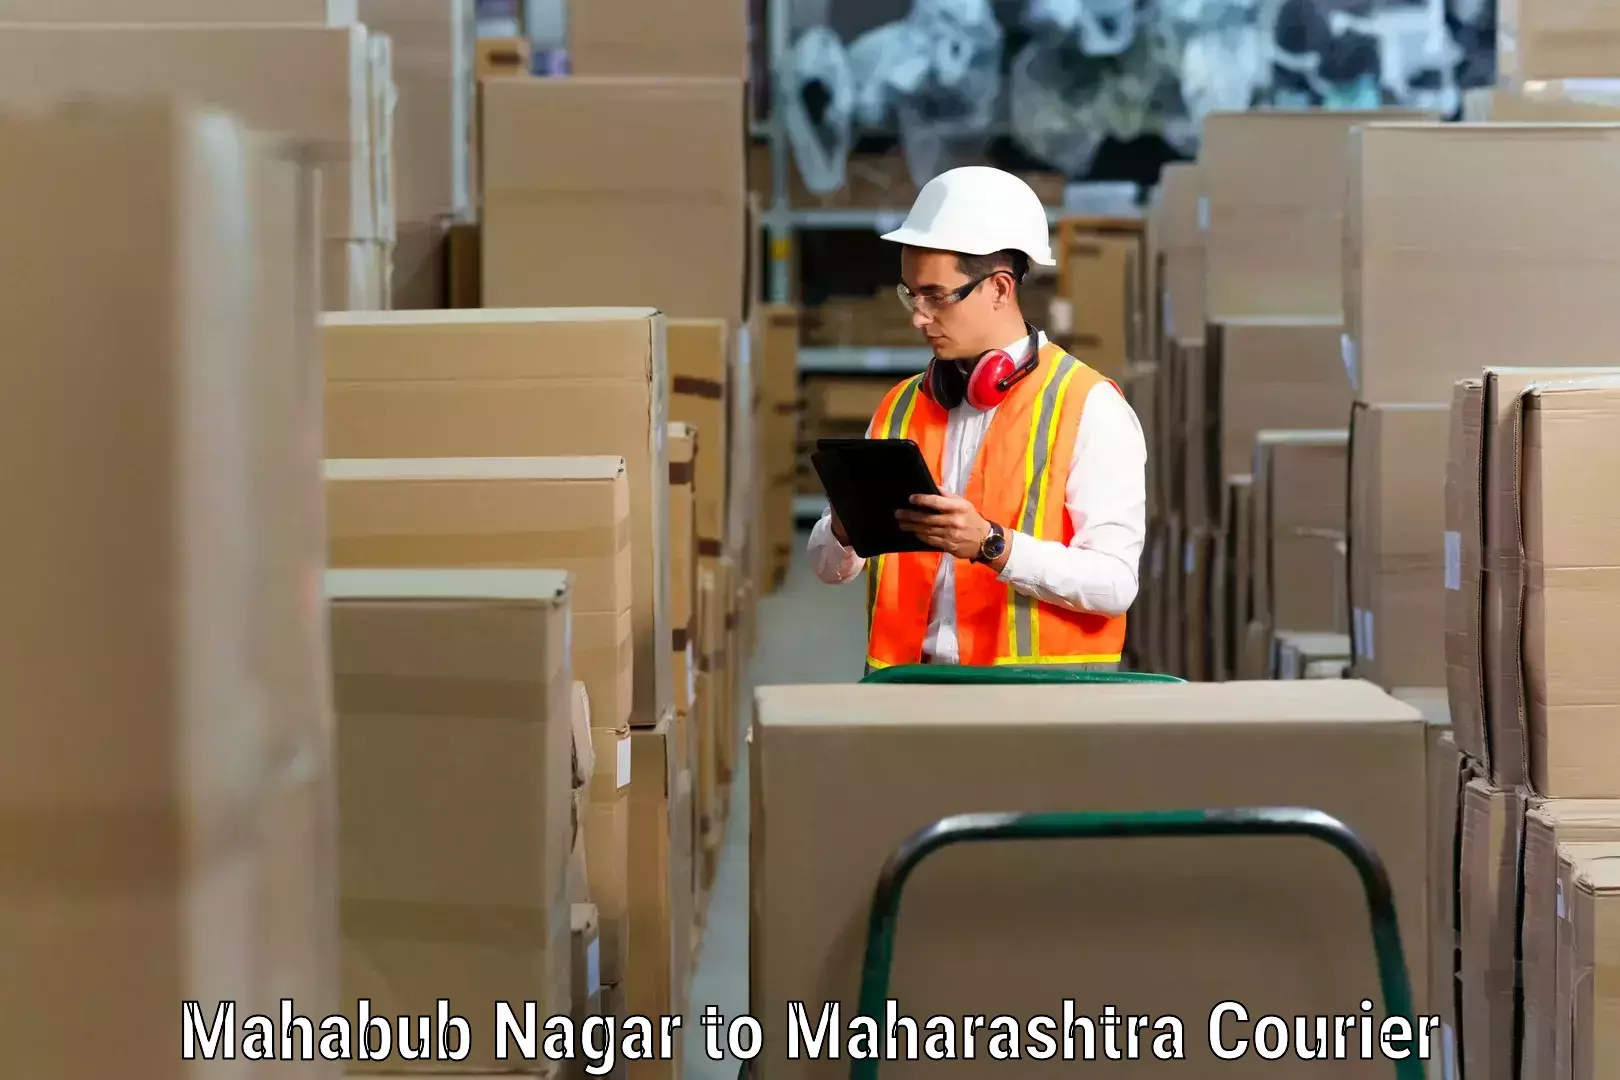 Furniture transport specialists Mahabub Nagar to Hinganghat